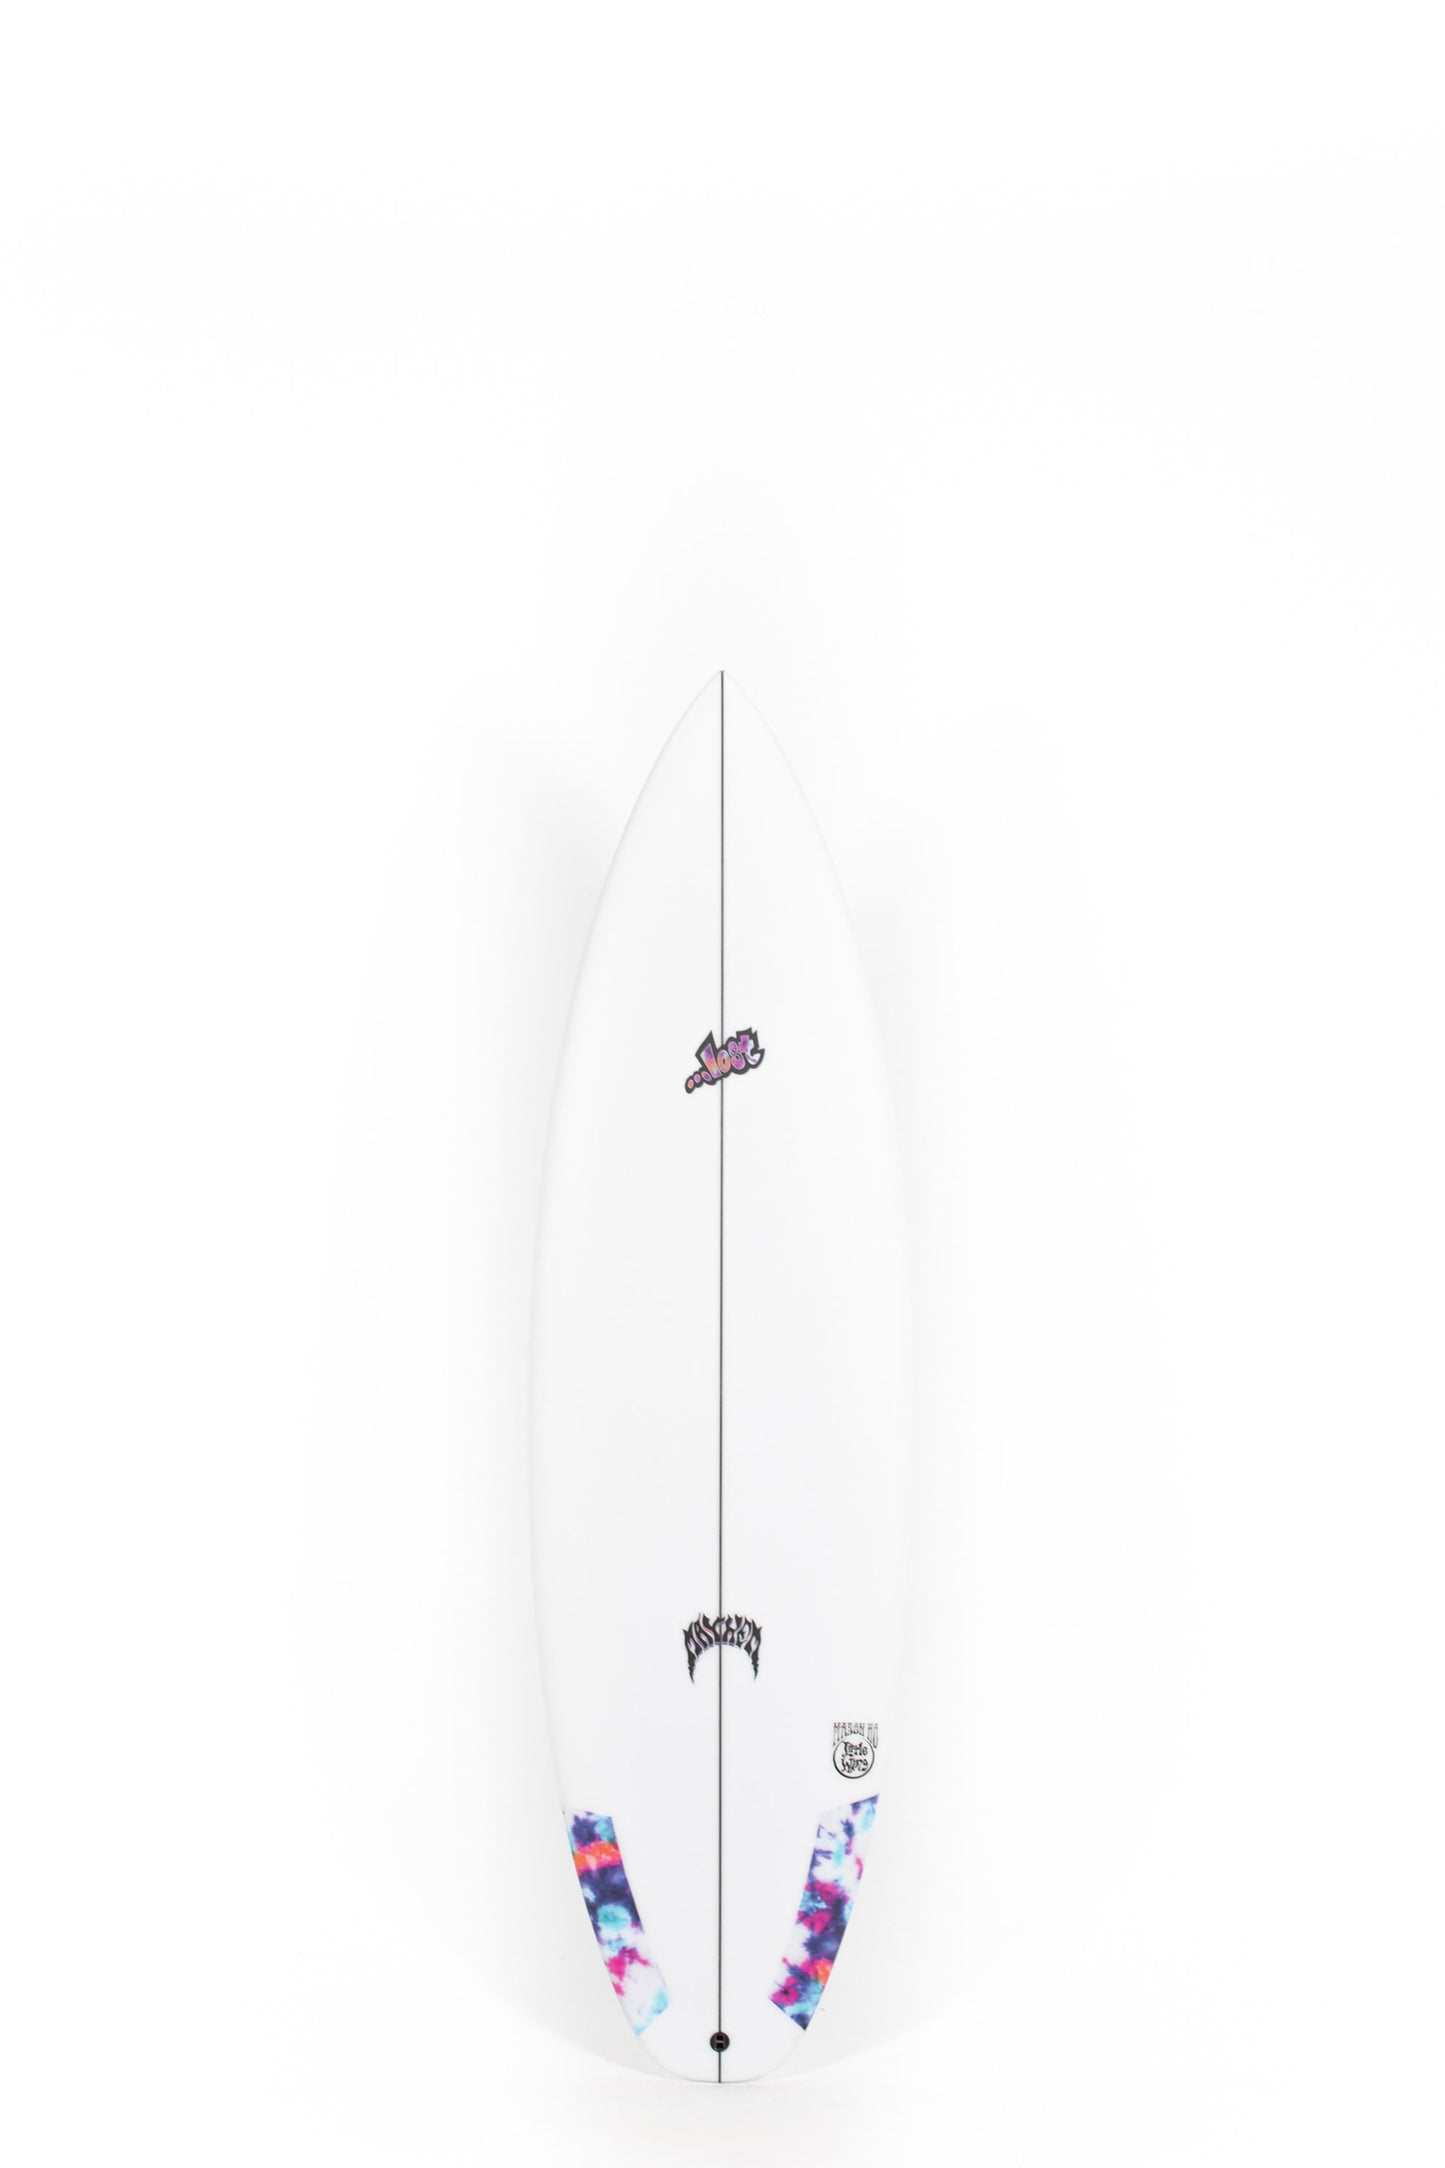 Pukas Surf Shop - Lost Surfboards - LITTLE WING by Matt Biolos - 6’2” x 20'50 x 2,60 - 34'50L - MH15621